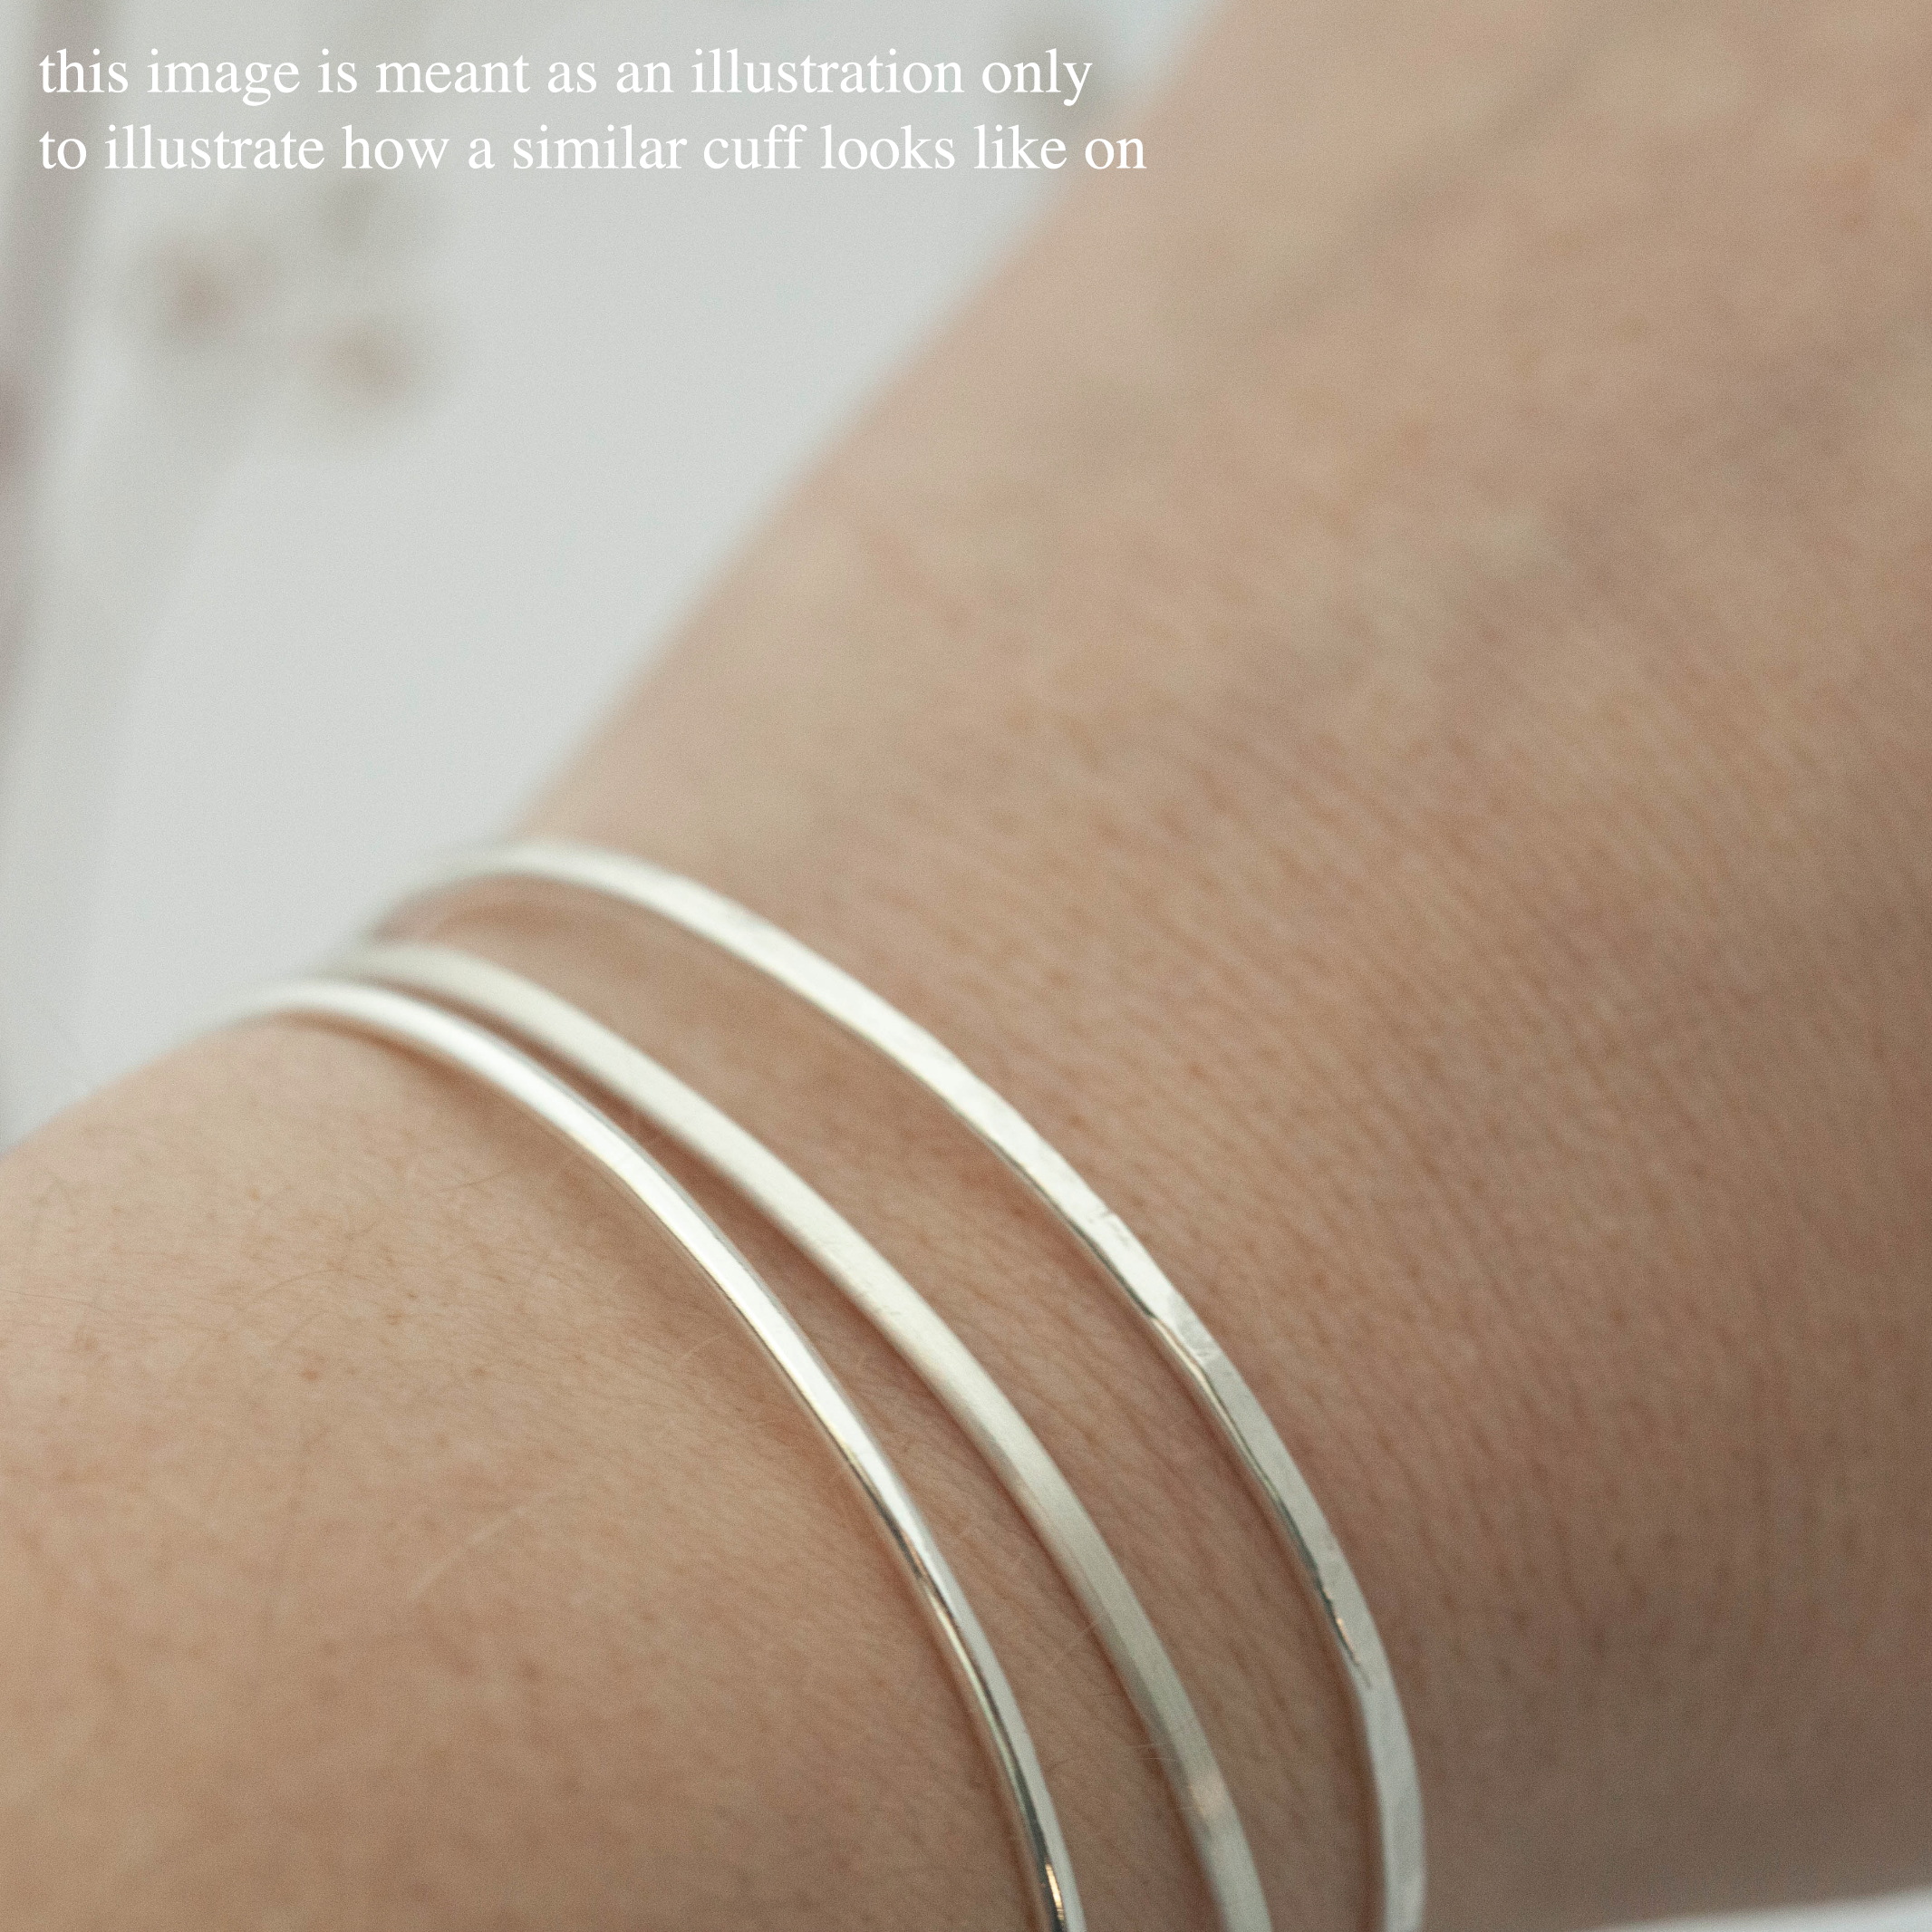 OOAK Simple thin bracelet in silver #2 • size 5cm & 5,5cm (ready-to-ship)